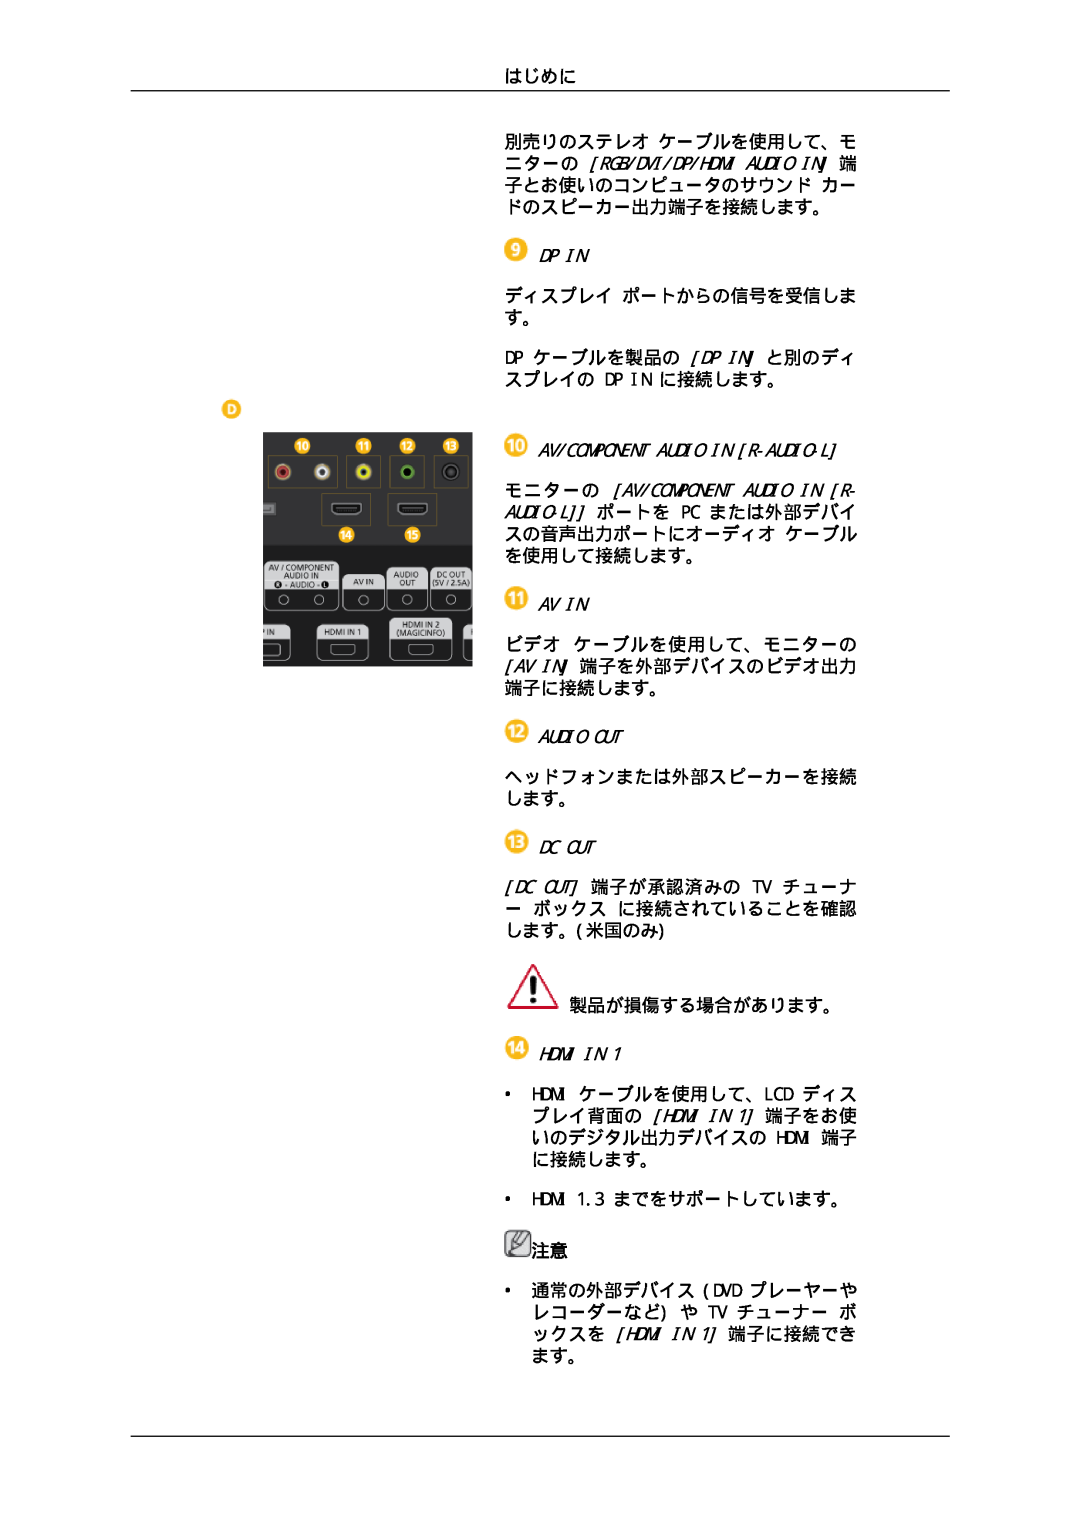 Samsung LH46CKQLBB/XJ, LH46CBULBB/XJ manual Dp In, Av/Component Audio In R-Audio-L, Av In, Audio Out, Dc Out, Hdmi In 